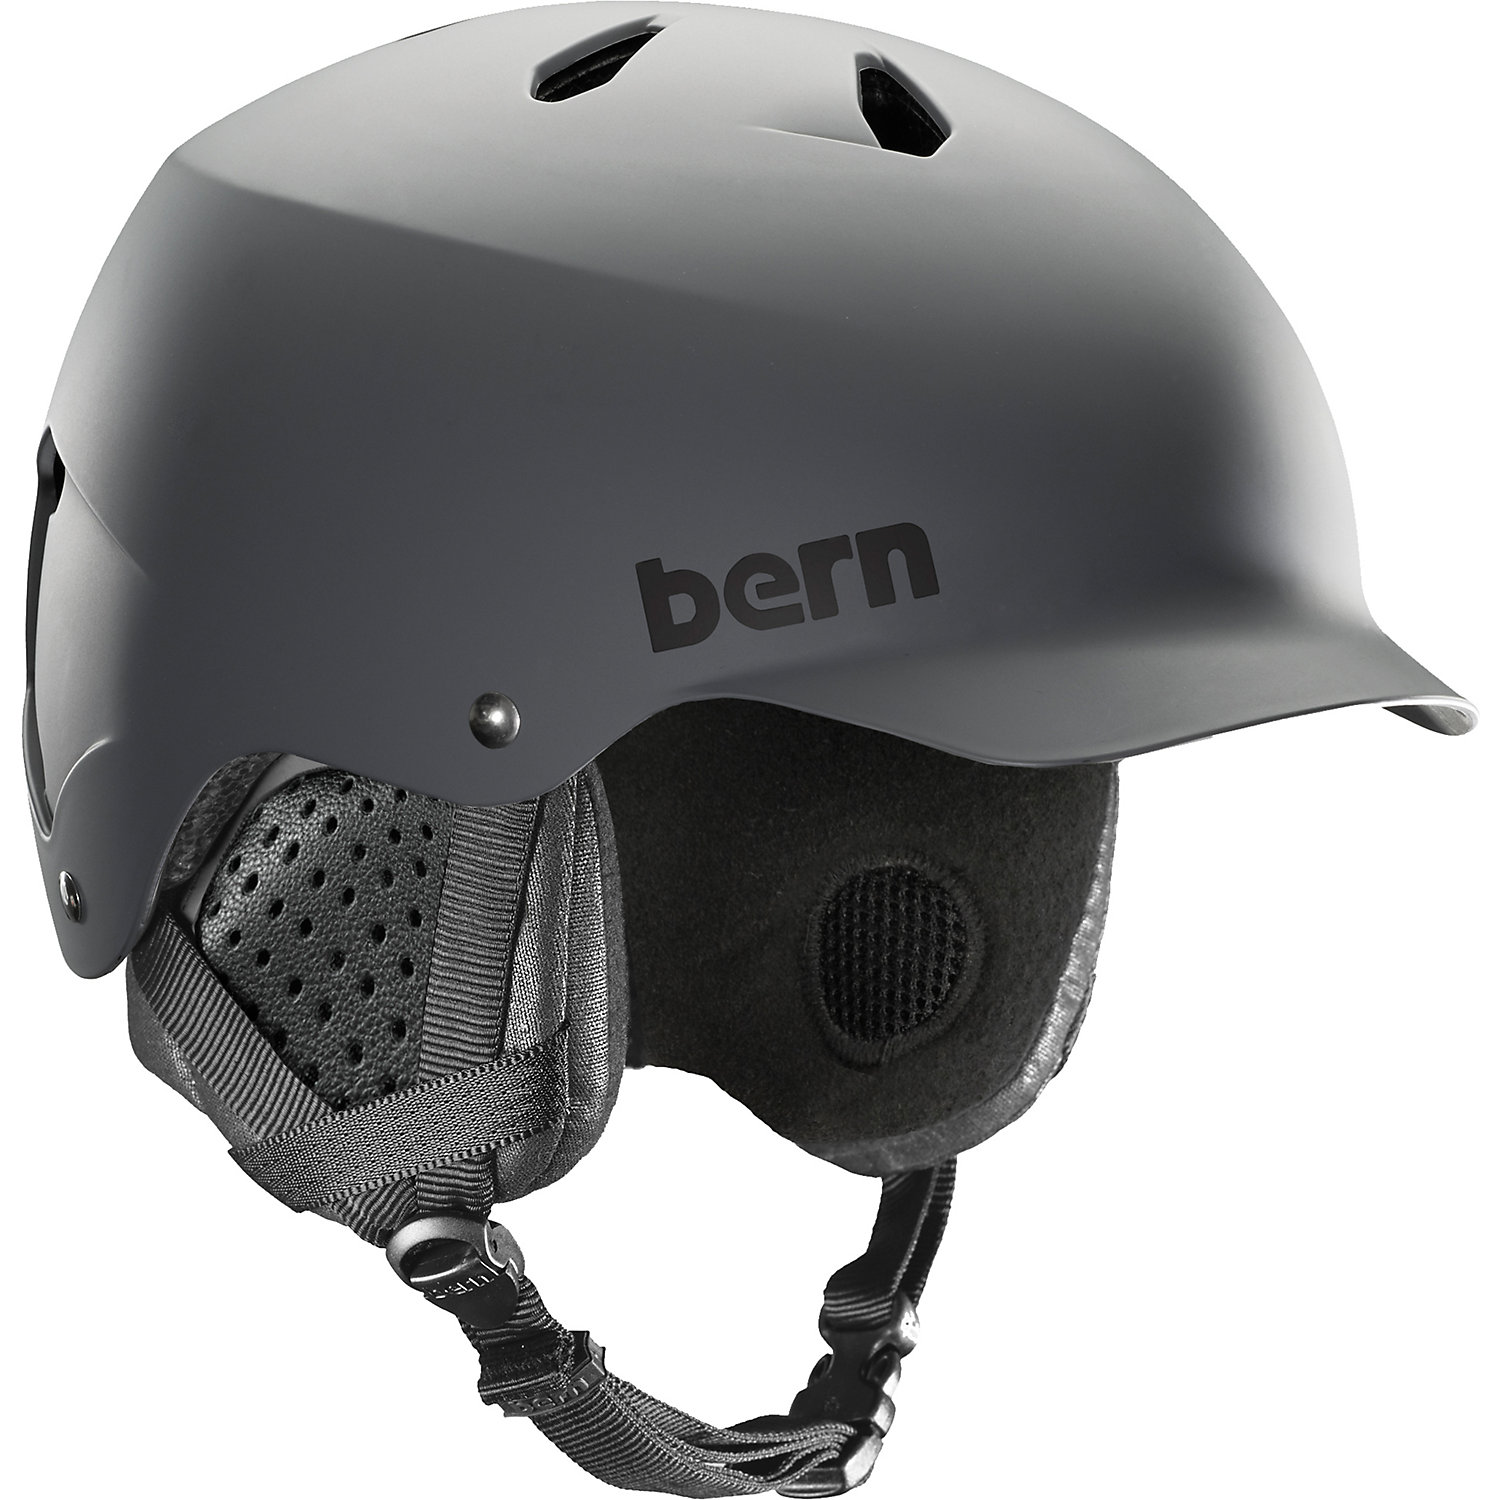 Large 59-62cm Bern Watts Thin Shell EPS All Season Men's Helmet-Matte Black 